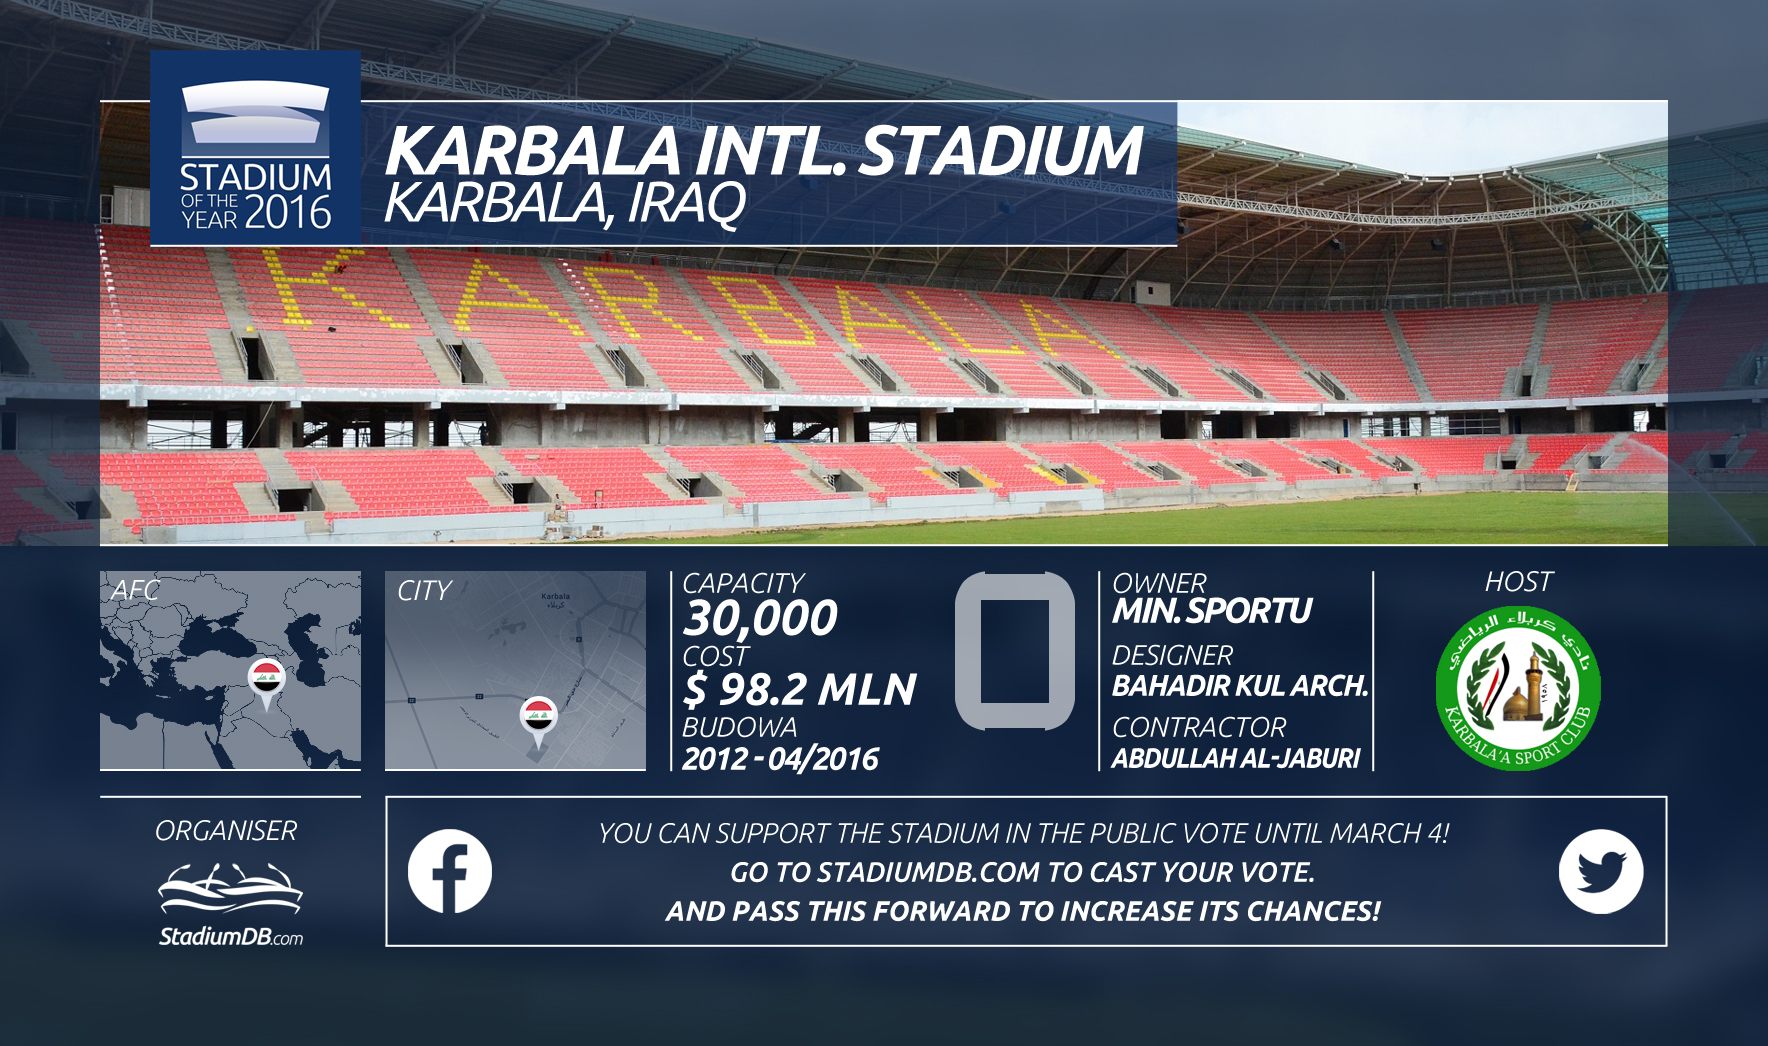 Karbala Stadium